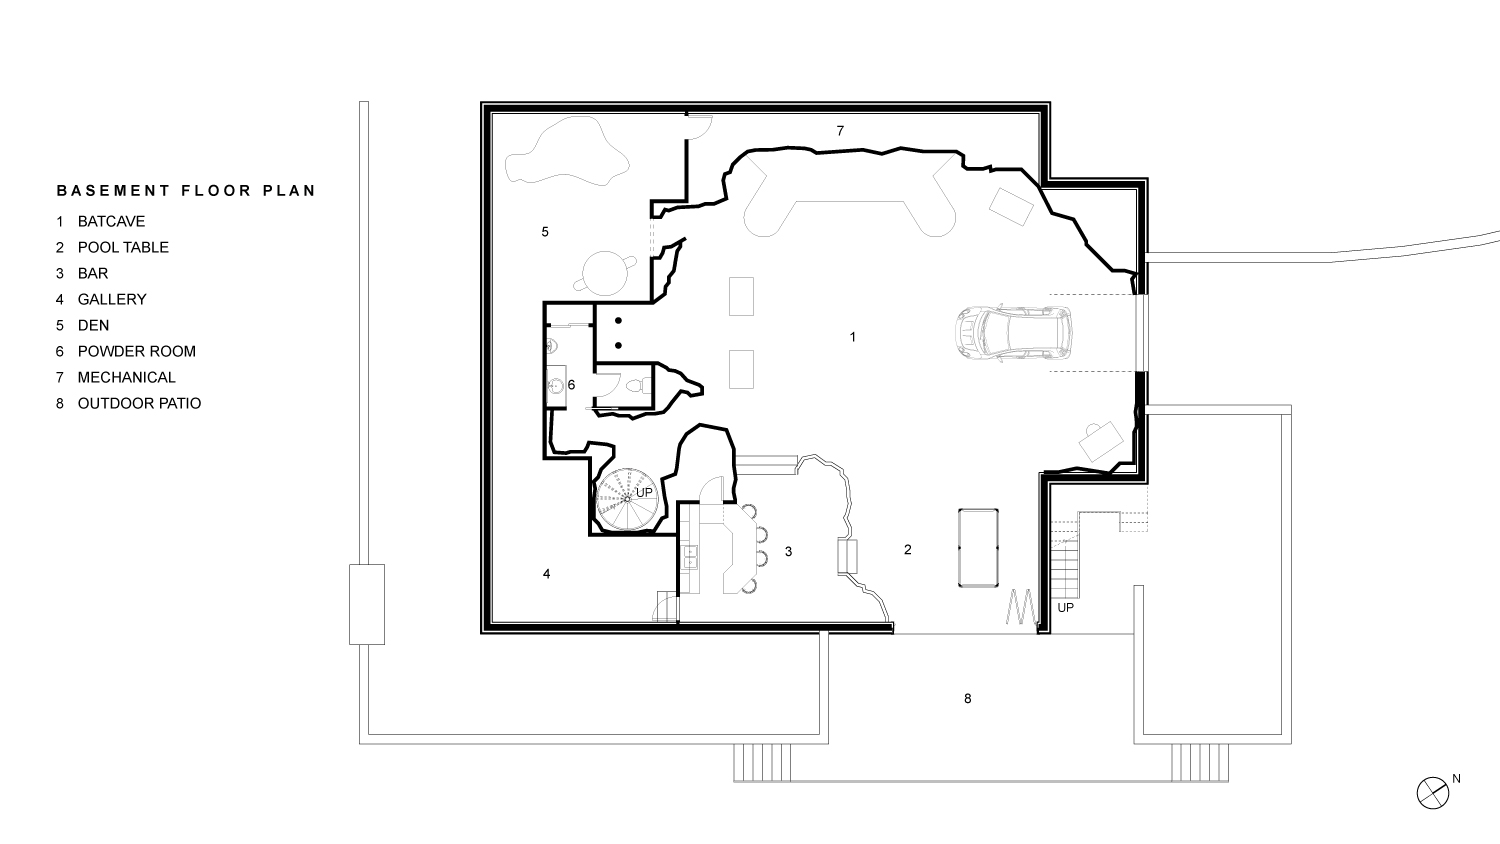 Woodruff Basement Floor Plan